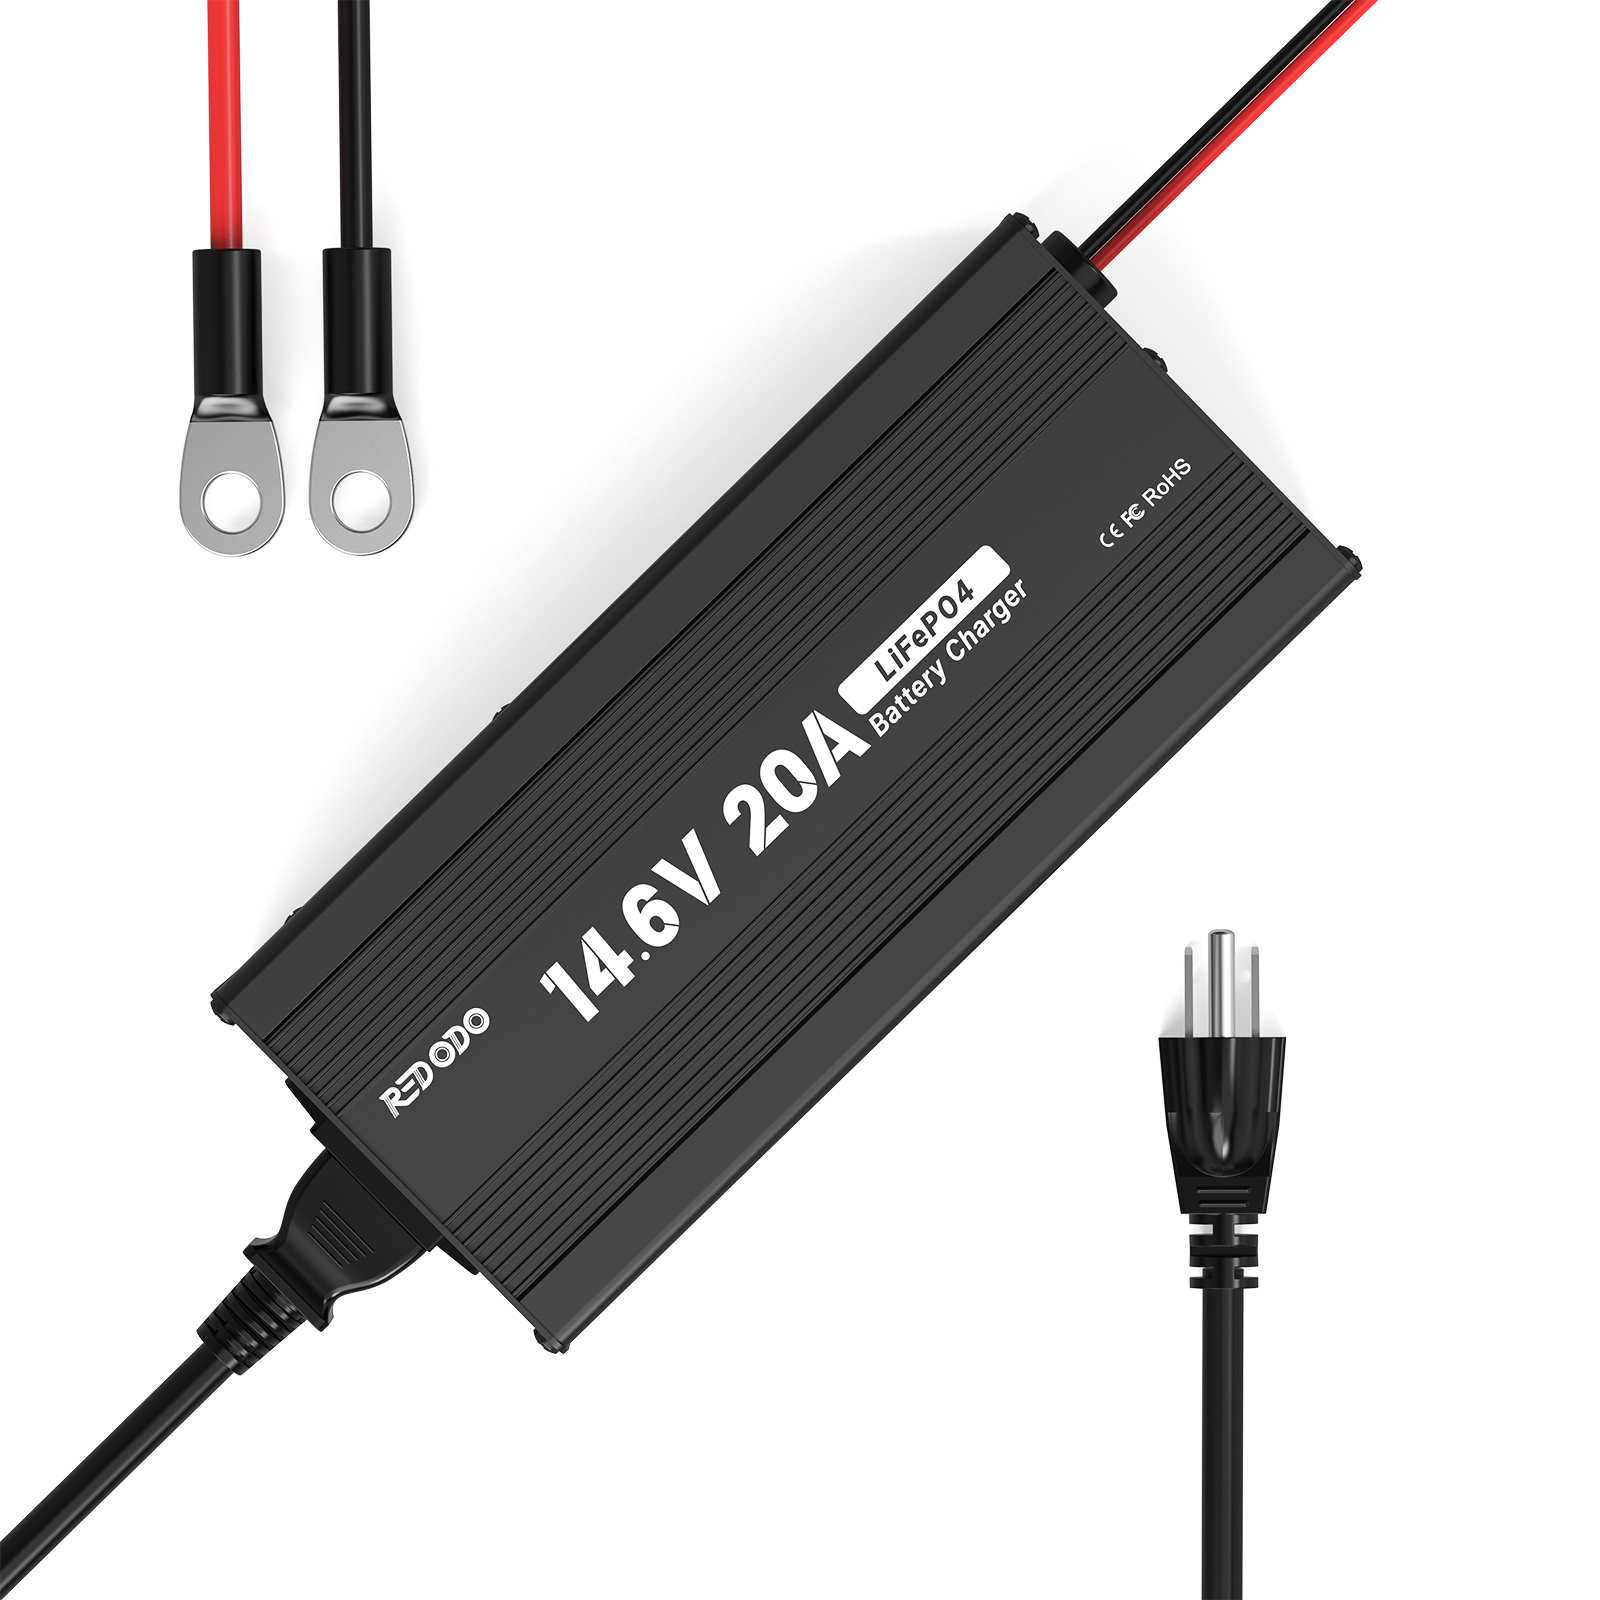 【Only $95】Redodo 14.6V 20A Lifepo4 battery charger Redodo Power